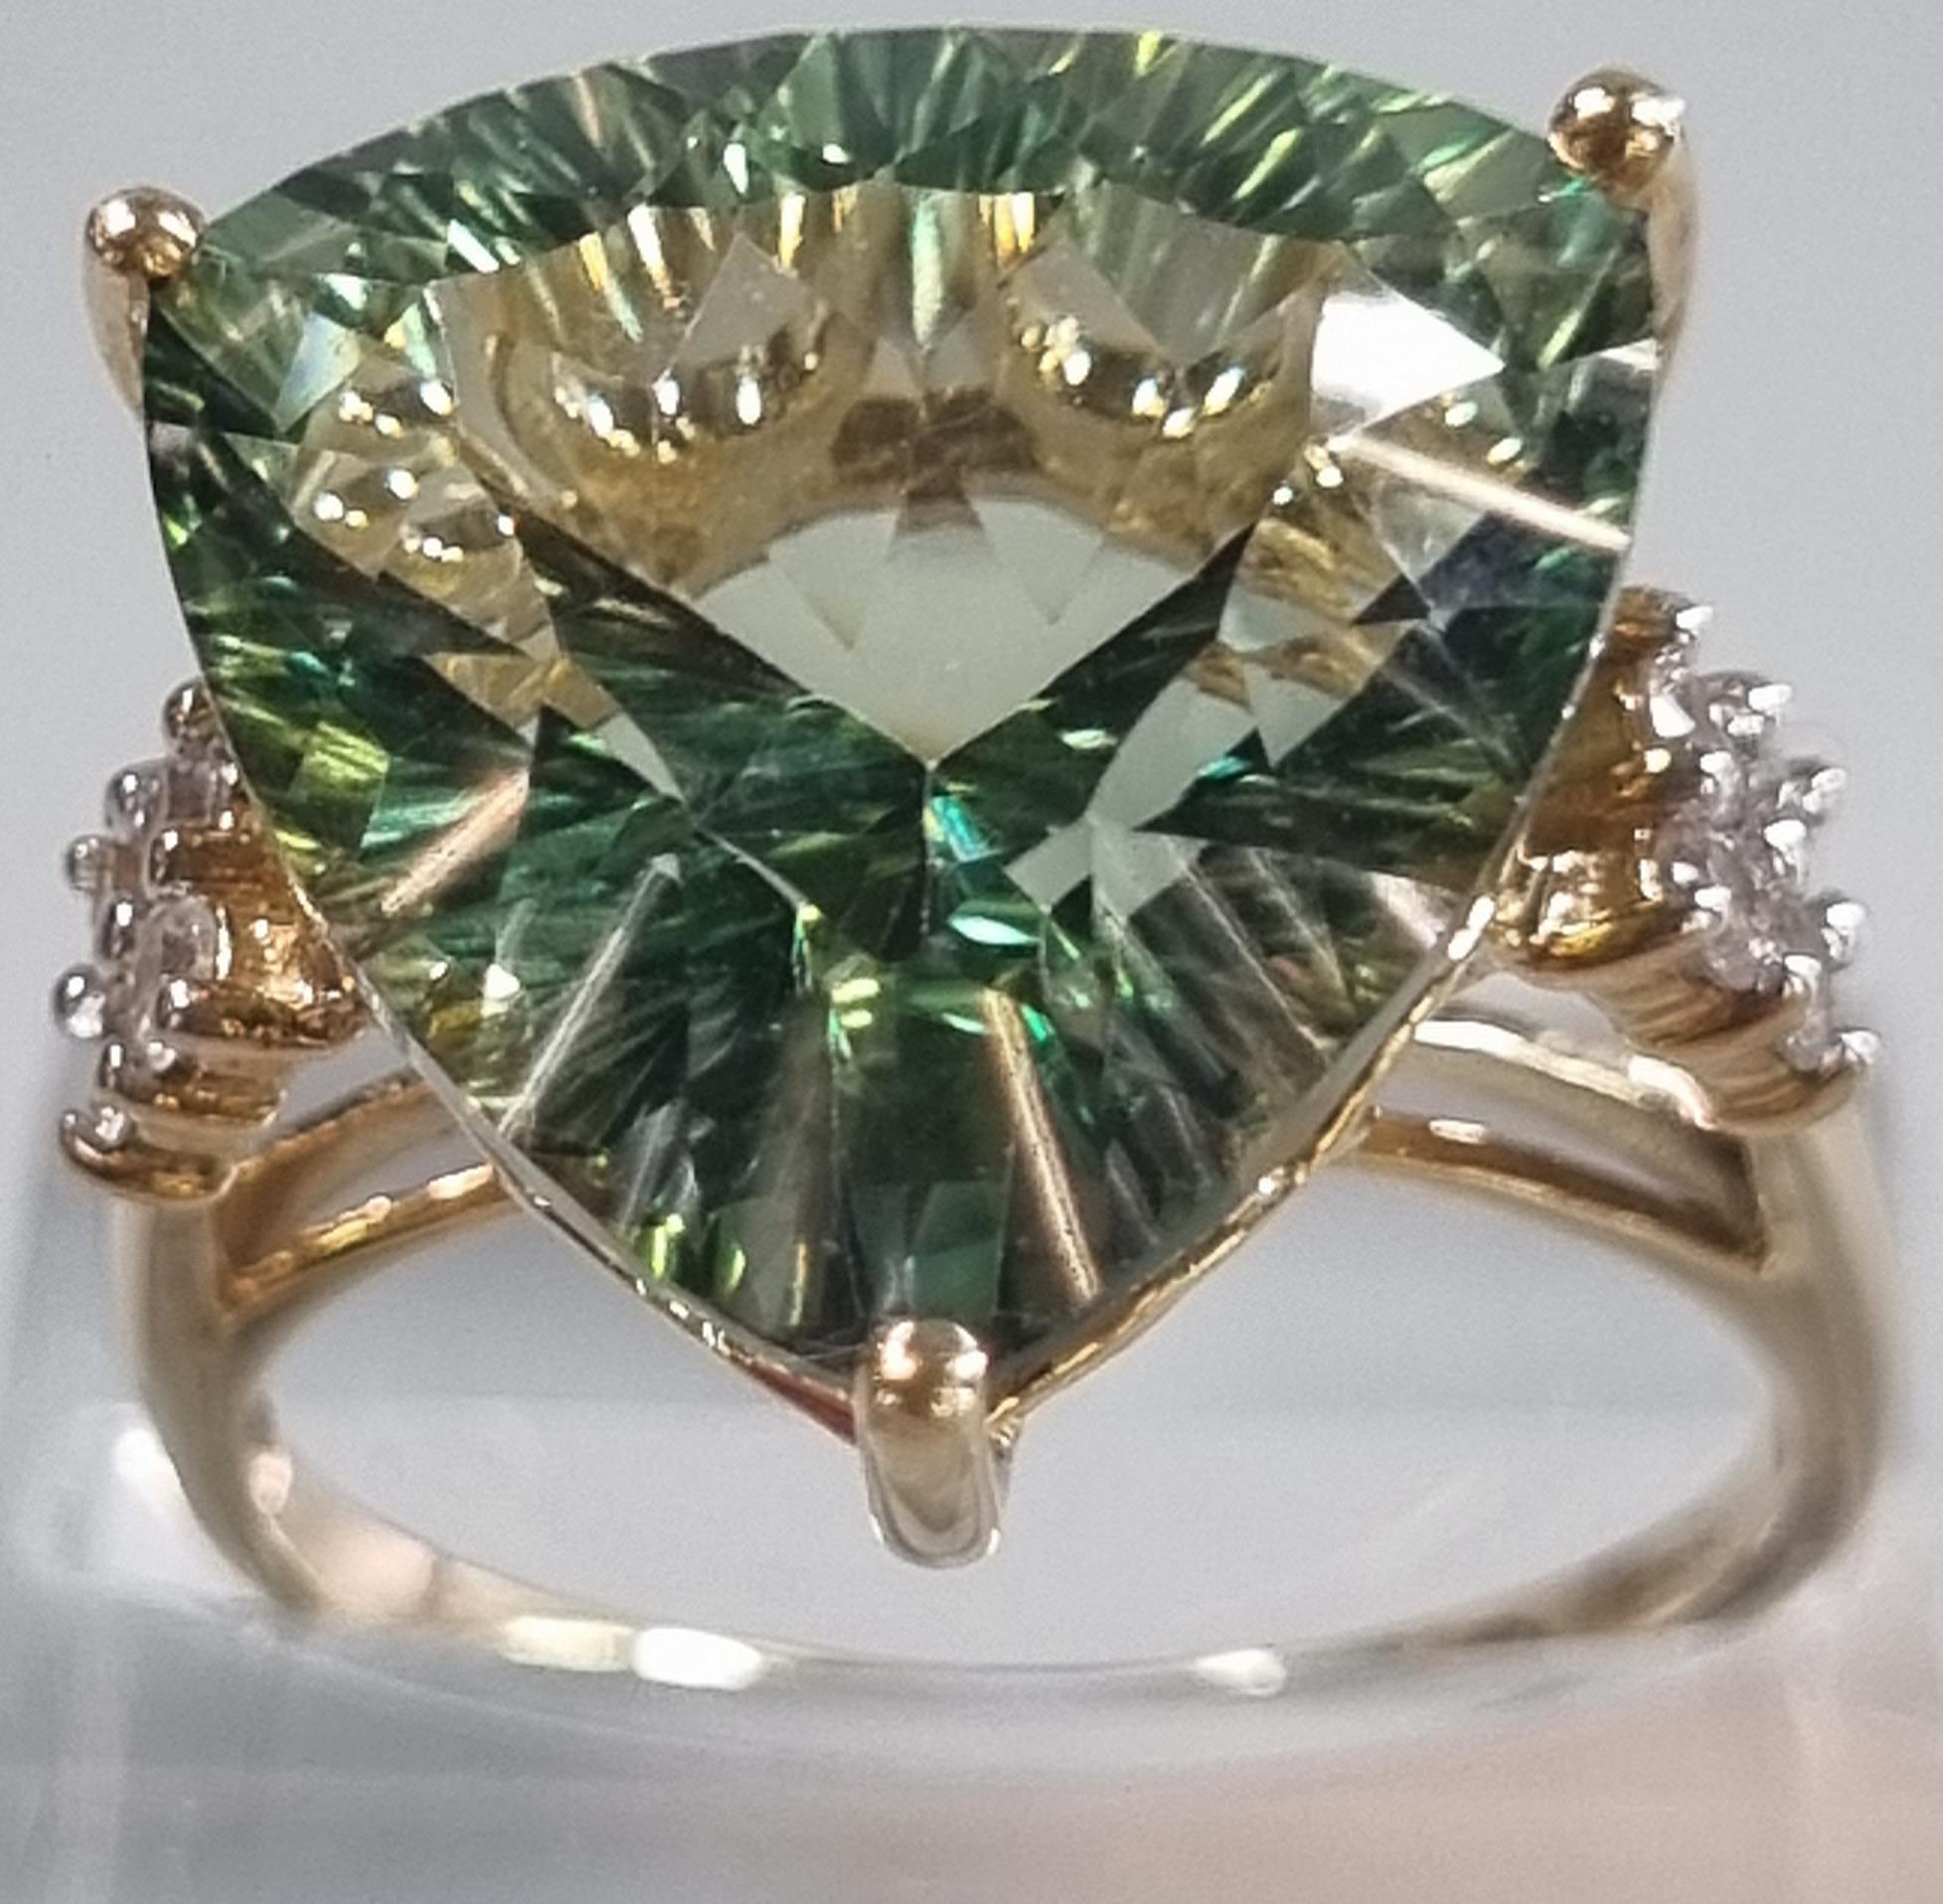 9ct gold 'Kiwi' green topaz and white sapphire ring. Sri Lankan origin. 14.275 carat weight. Size R.